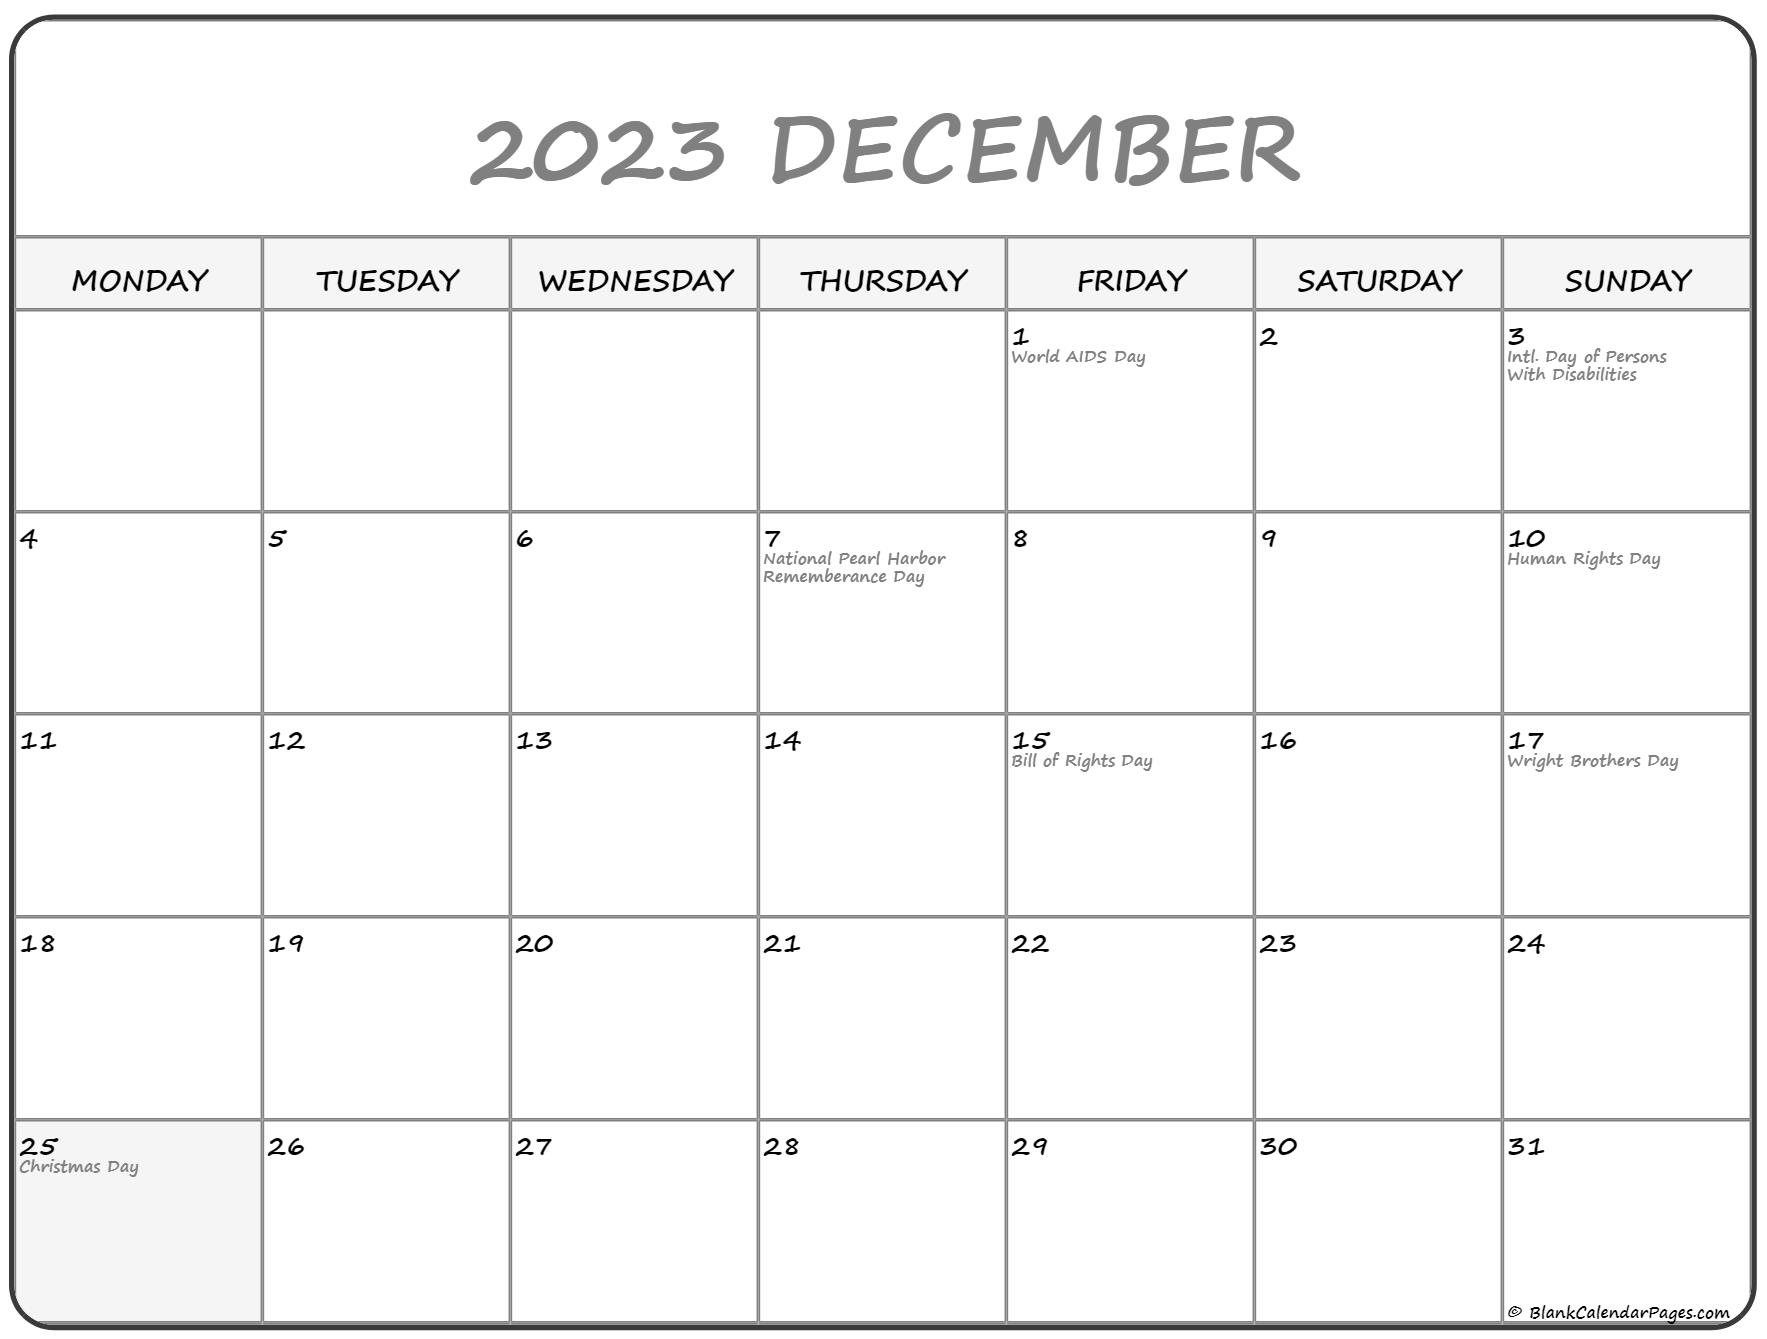 december-2023-calendar-to-print-free-get-latest-map-update